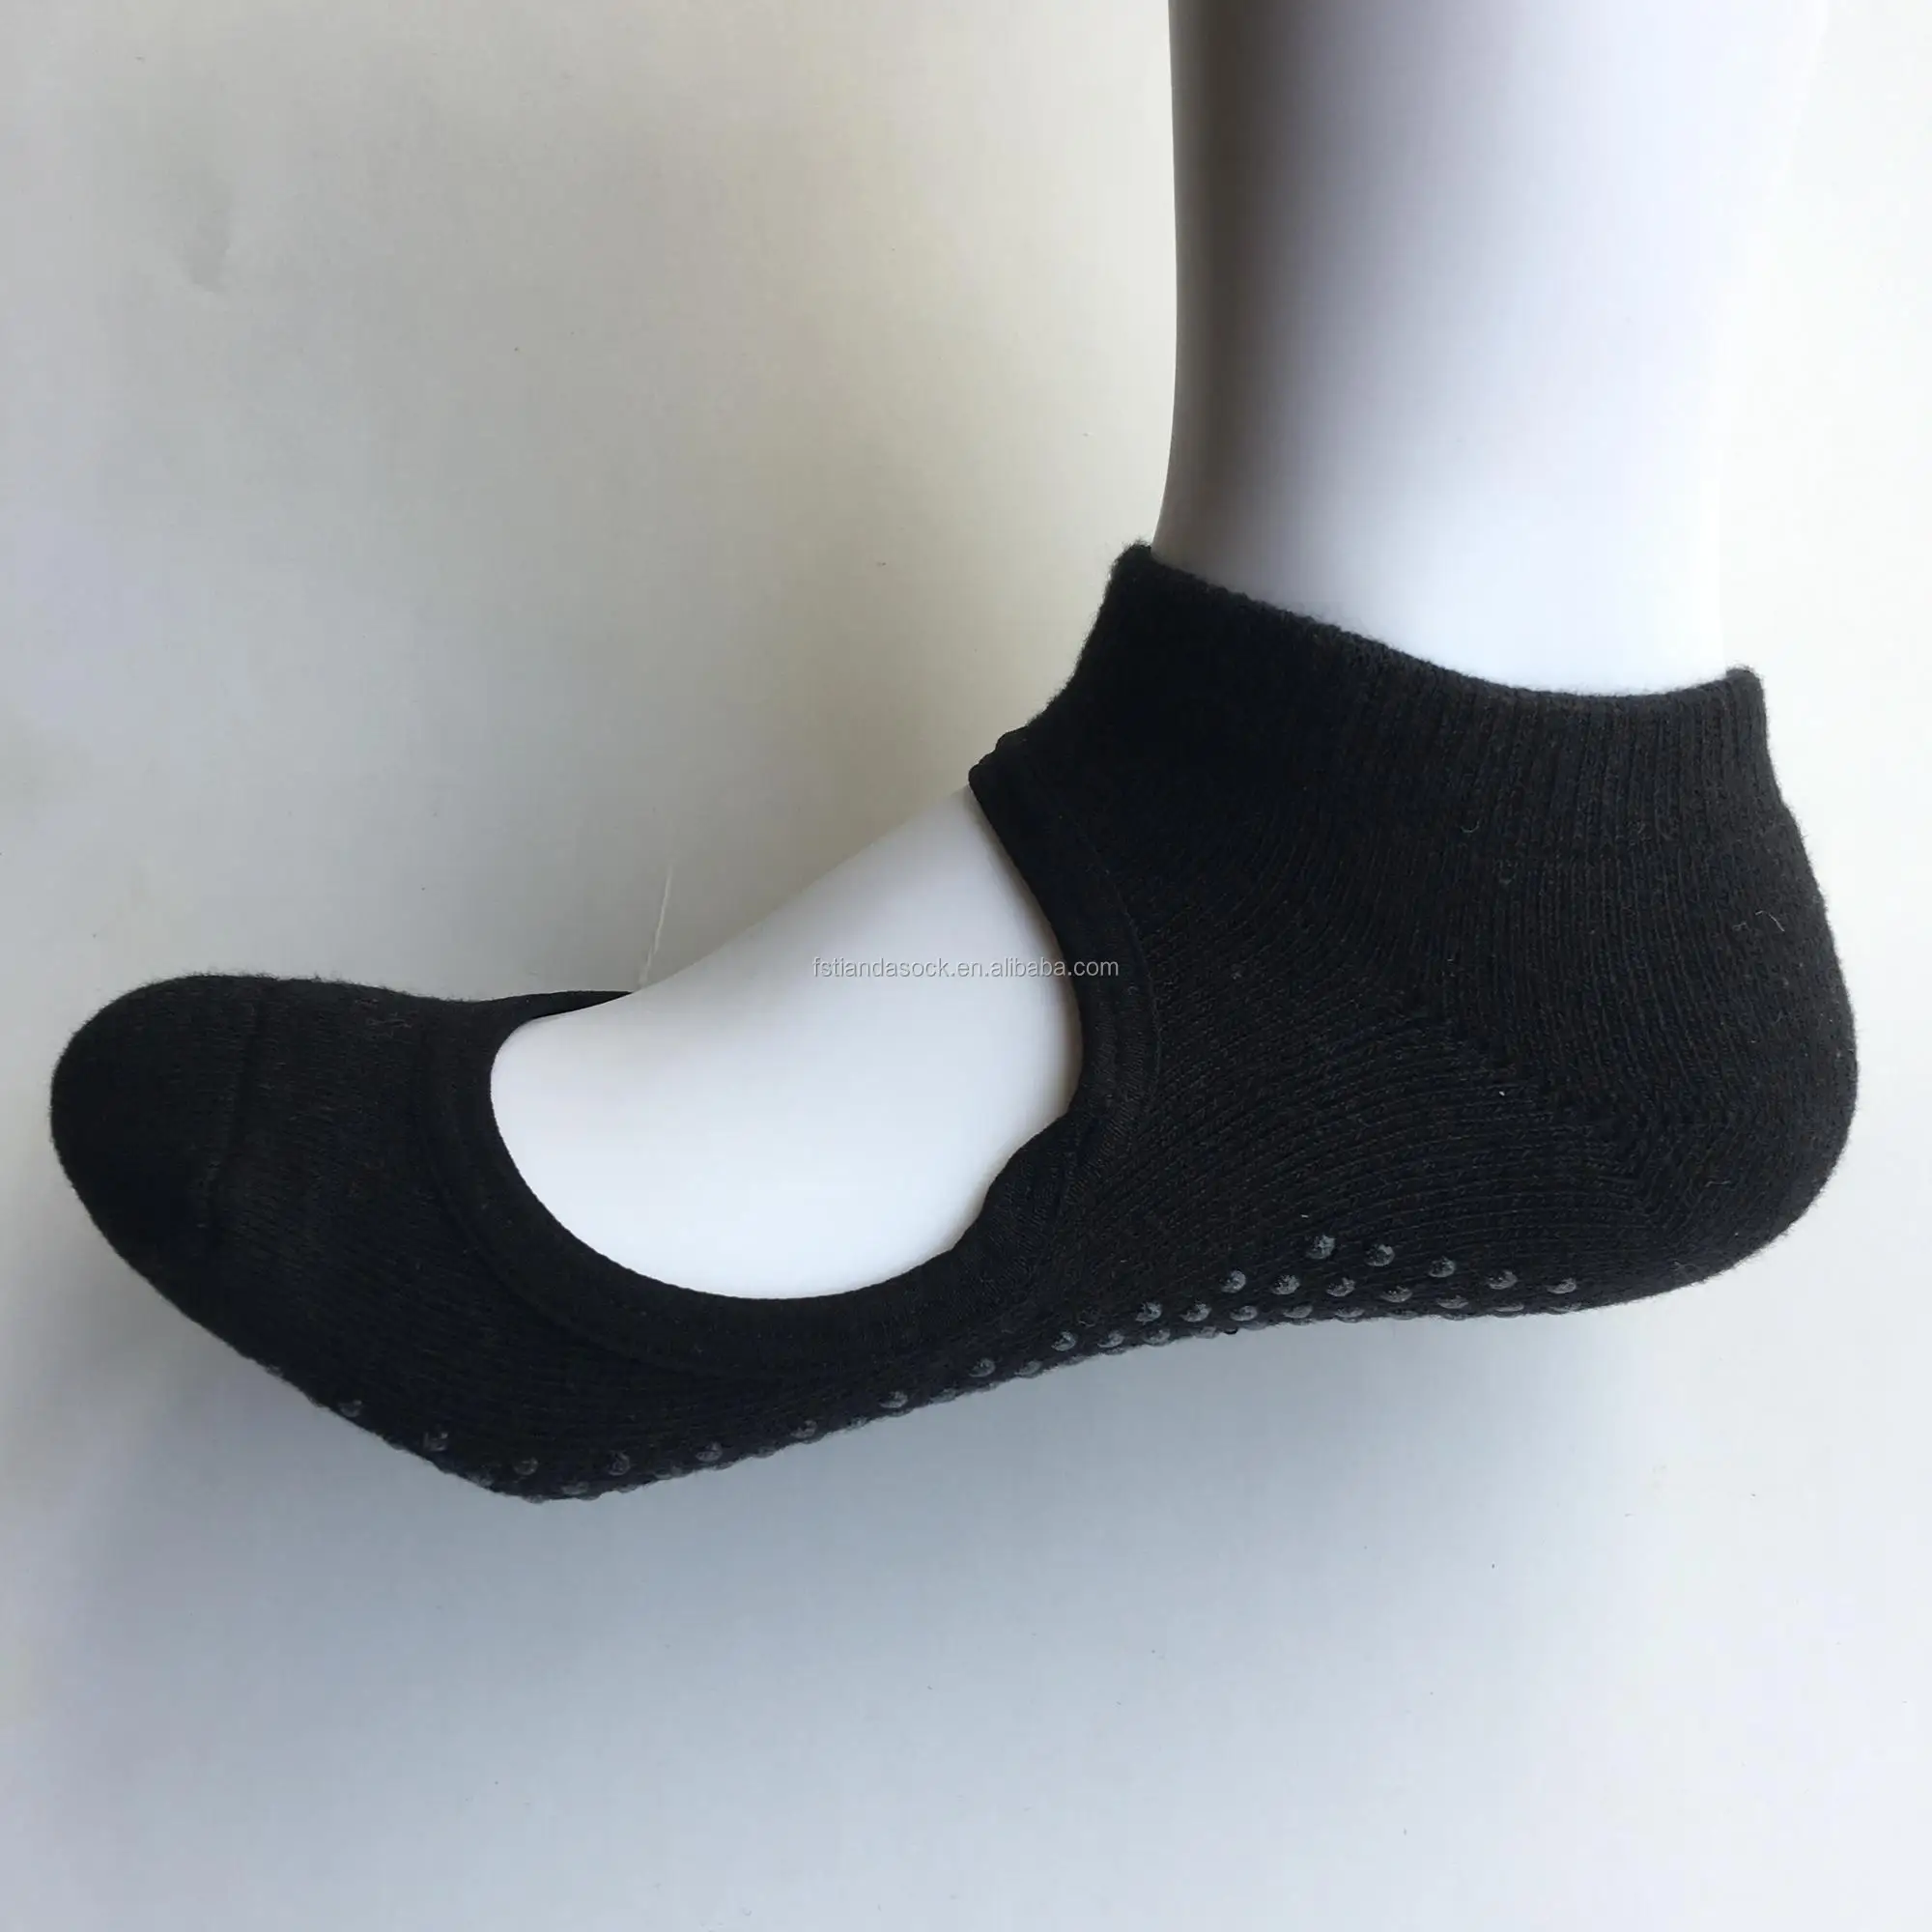 Cutout Reformer Pilates Socks Non Slip Grip Vinyasa Sock Cotton Yin ...